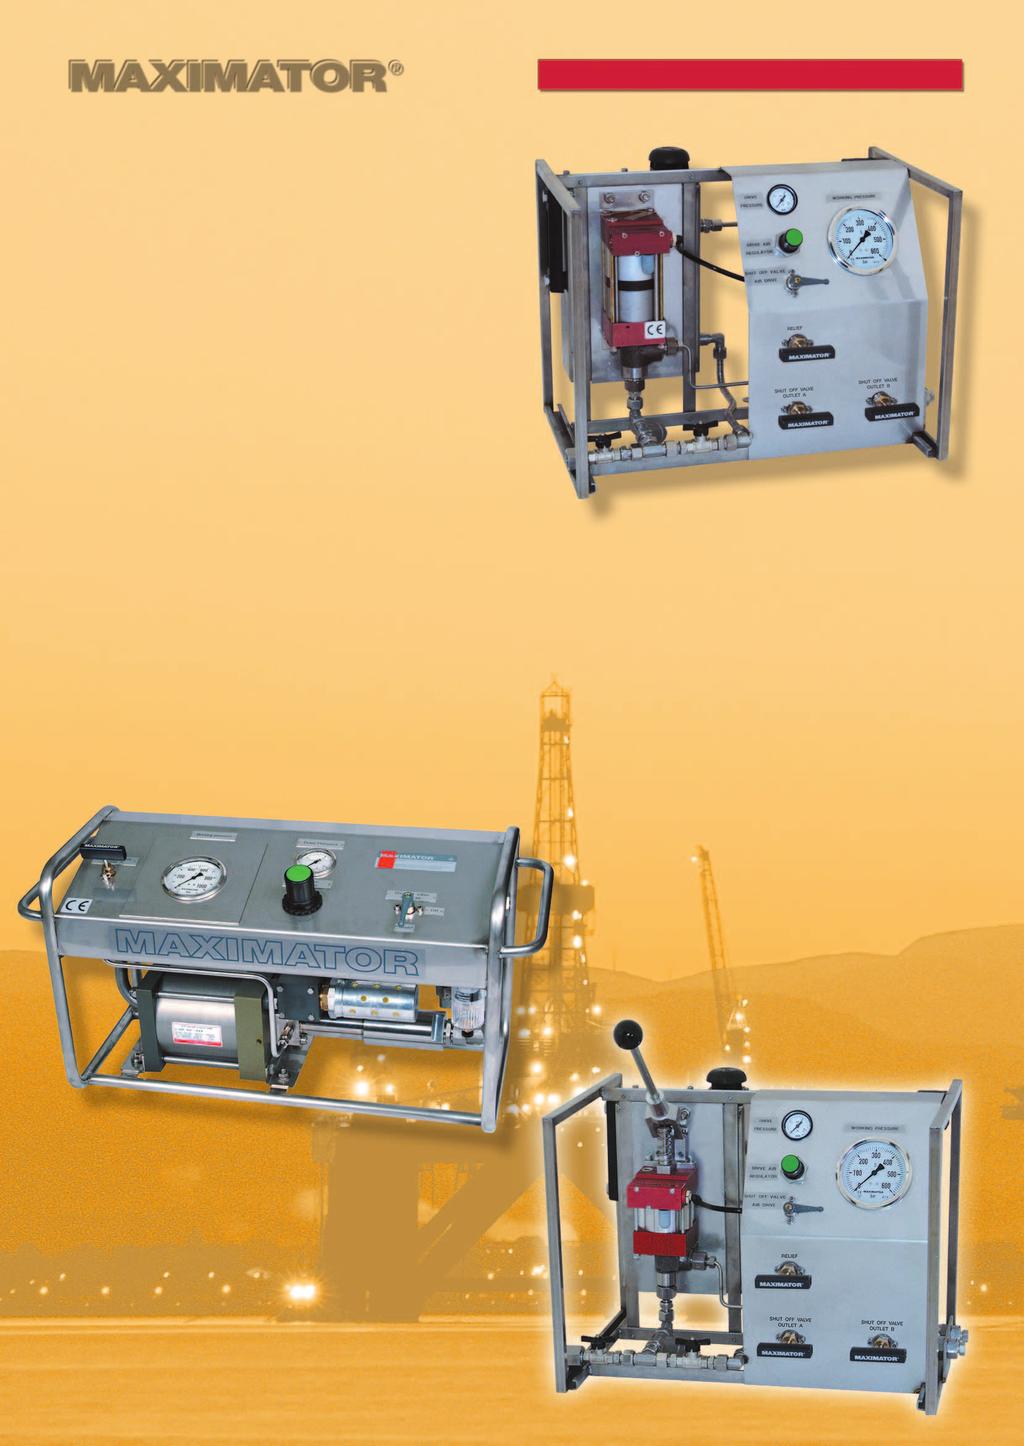 MAXIMATOR Air Driven Liquid Pumps, Power Units and Test Systems 6 lines of air driven liquid pumps Pressures from 4 bar (58 psi) up to 5,500 bar (79,750 psi).